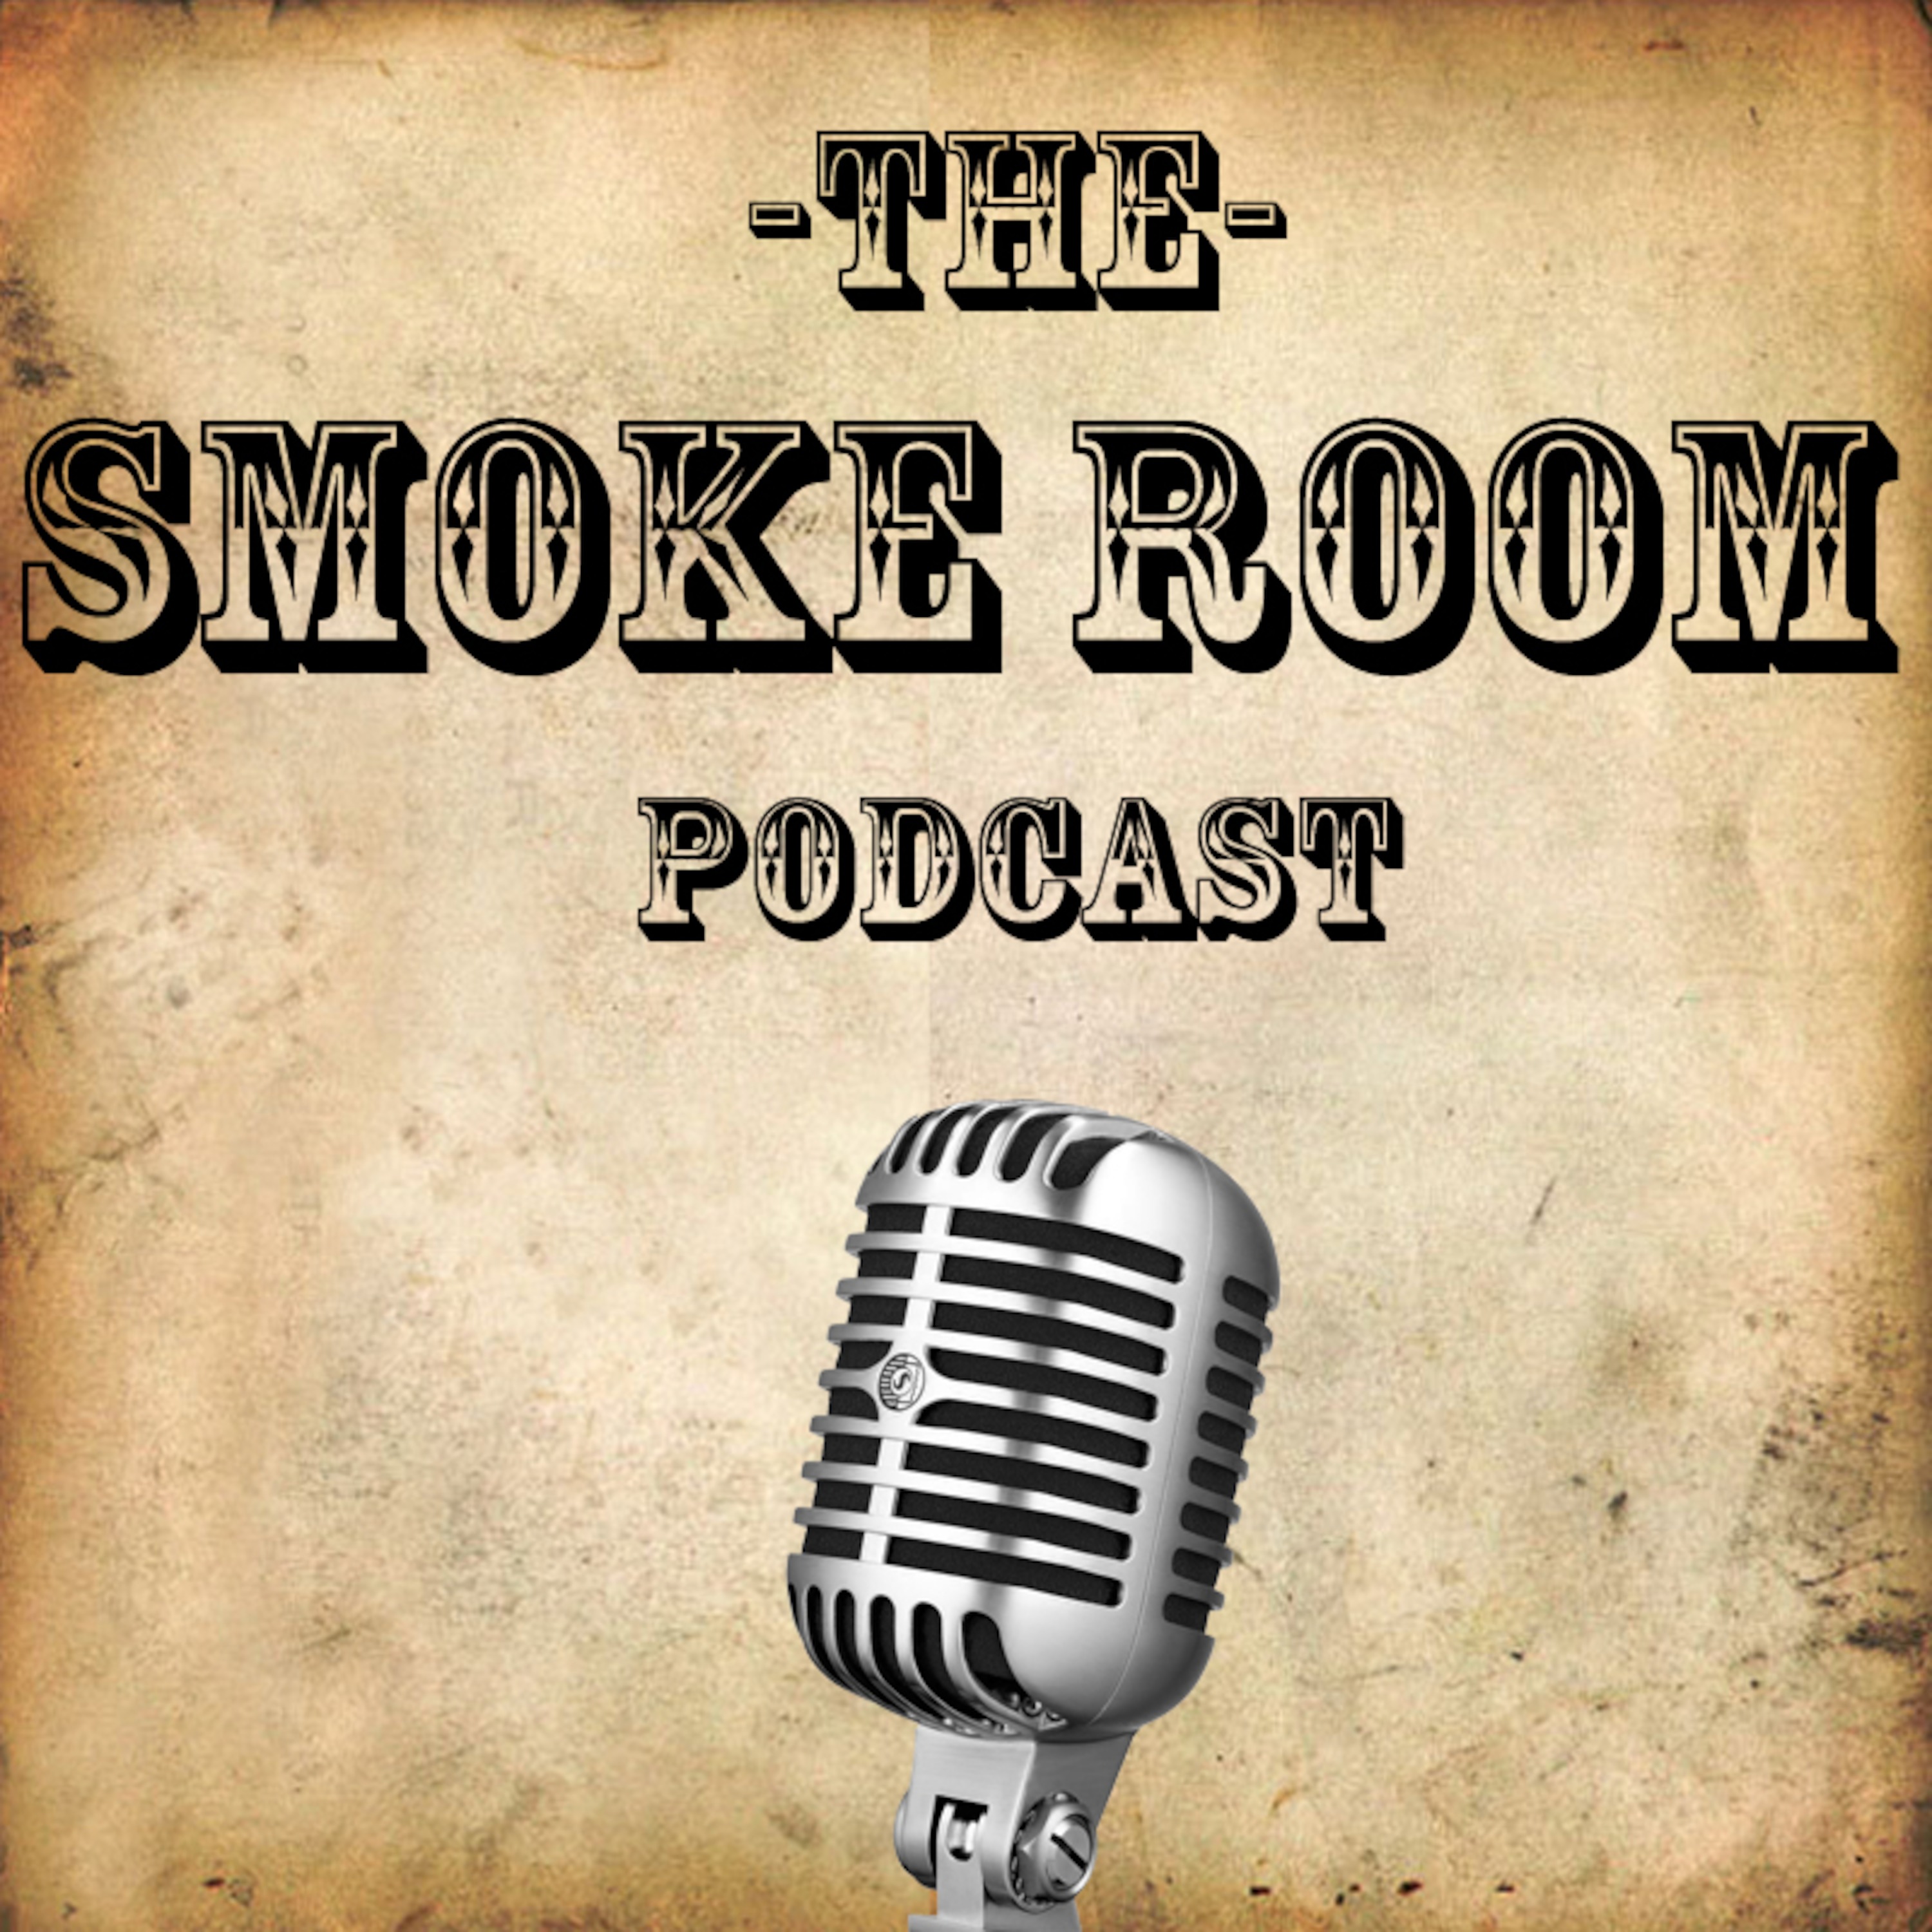 Smokeroom Podcast